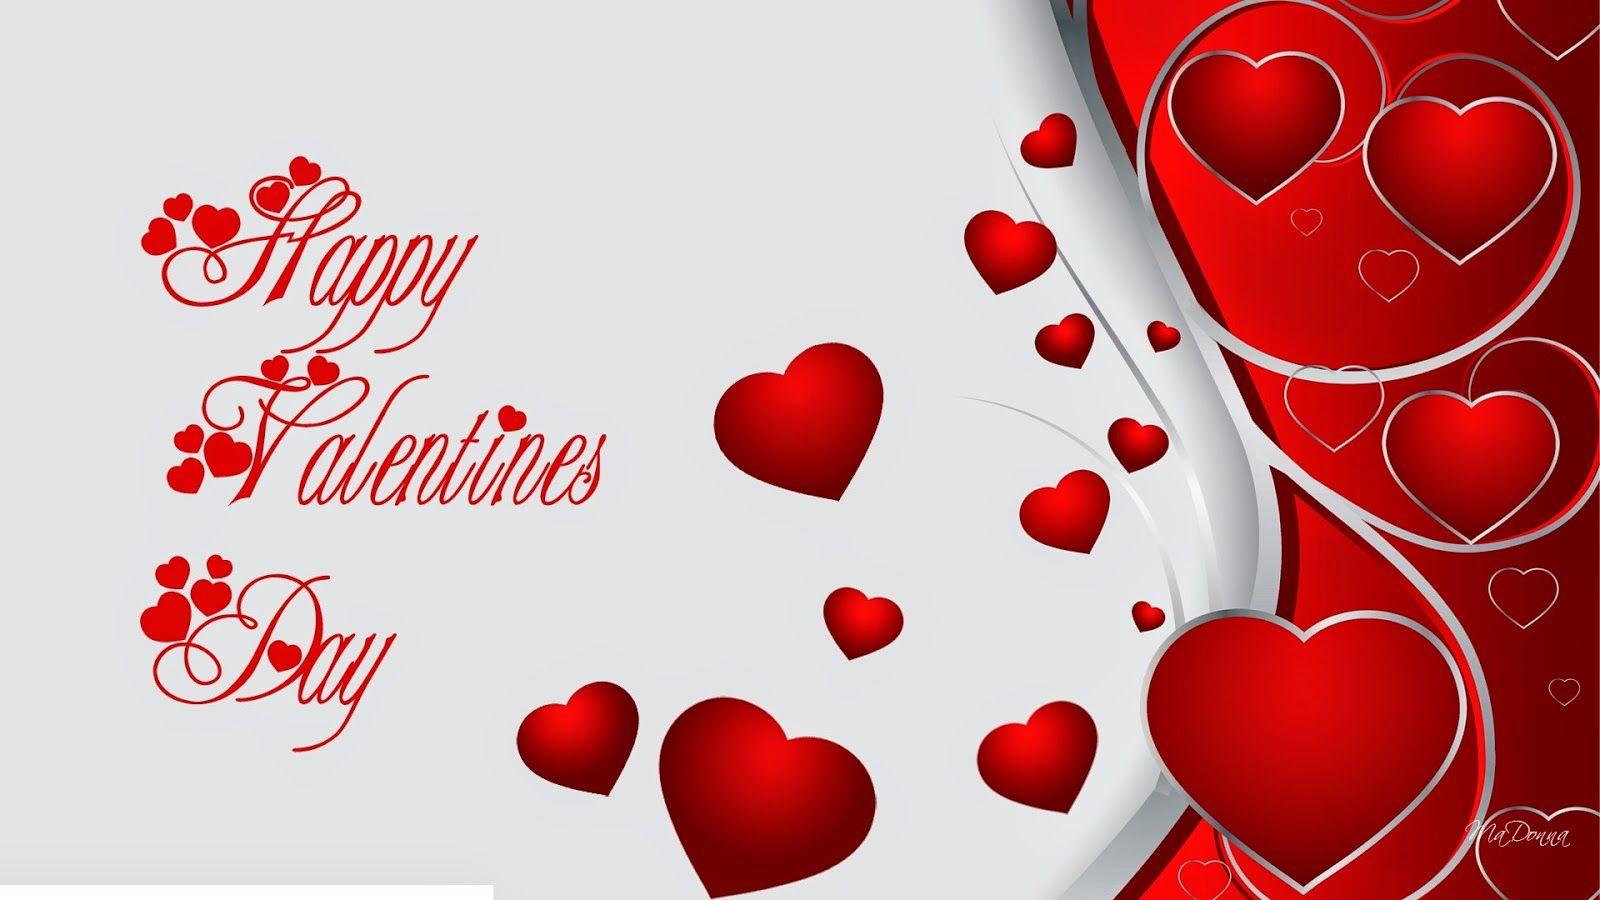 Happy Valentines Day Image. Happy valentines day photo, Valentine's day greeting cards, Happy valentines day card